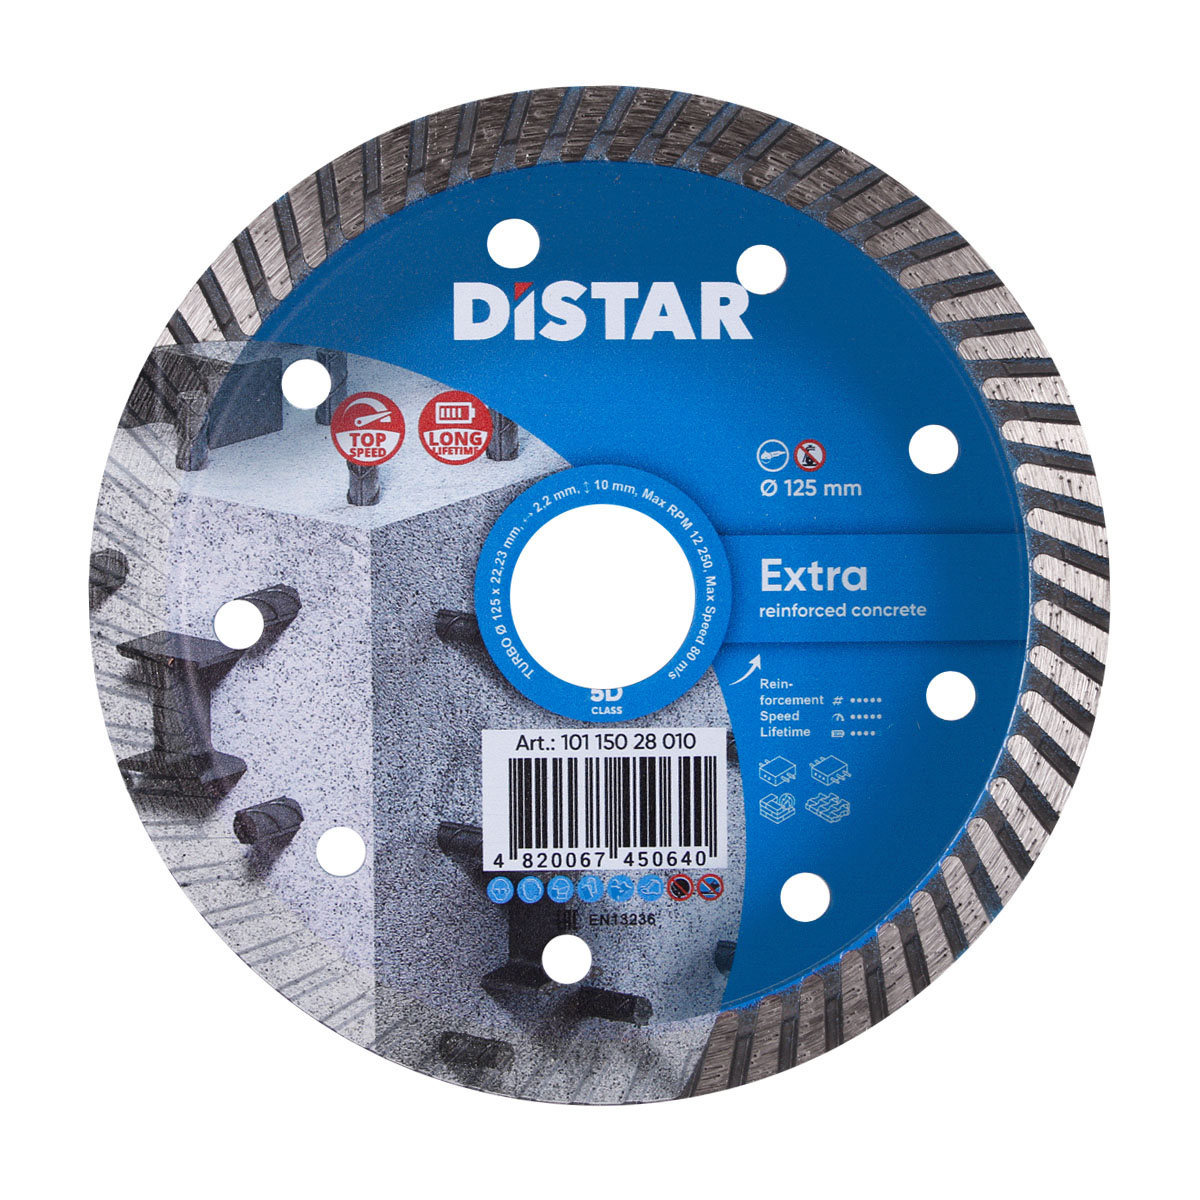 Диск алмазный отрезной по бетону для УШМ Distar 1A1R Turbo 125 мм Extra 5D диск алмазный turbo wave 230х22 2 20 мм союз 9020 04 230x22tw